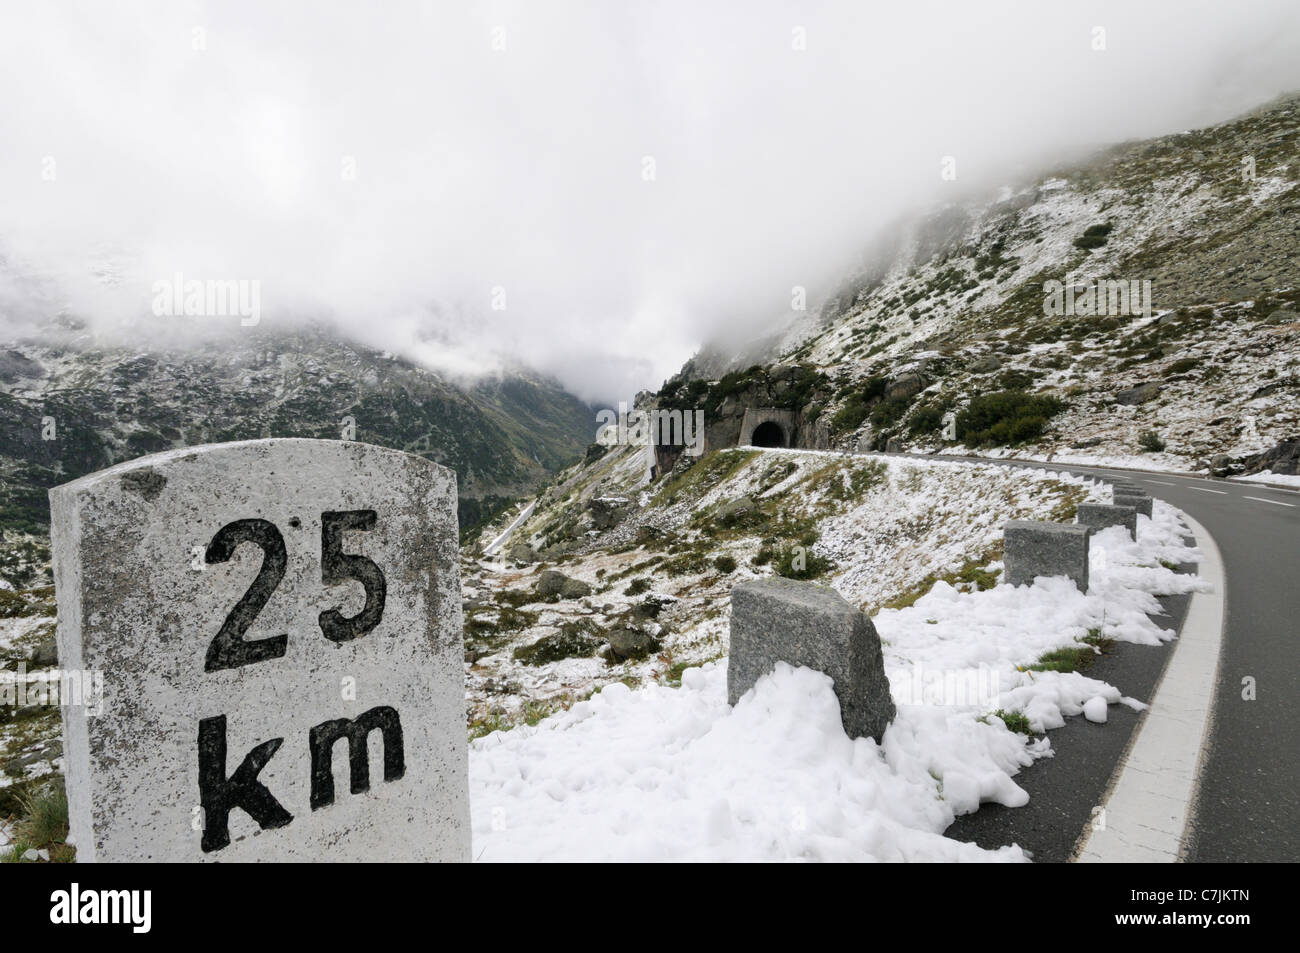 25 kilometer milestone on the Sustenpass. Switzerland, Western Europe, Berner Oberland, Susten region nr. Gadmen. Stock Photo